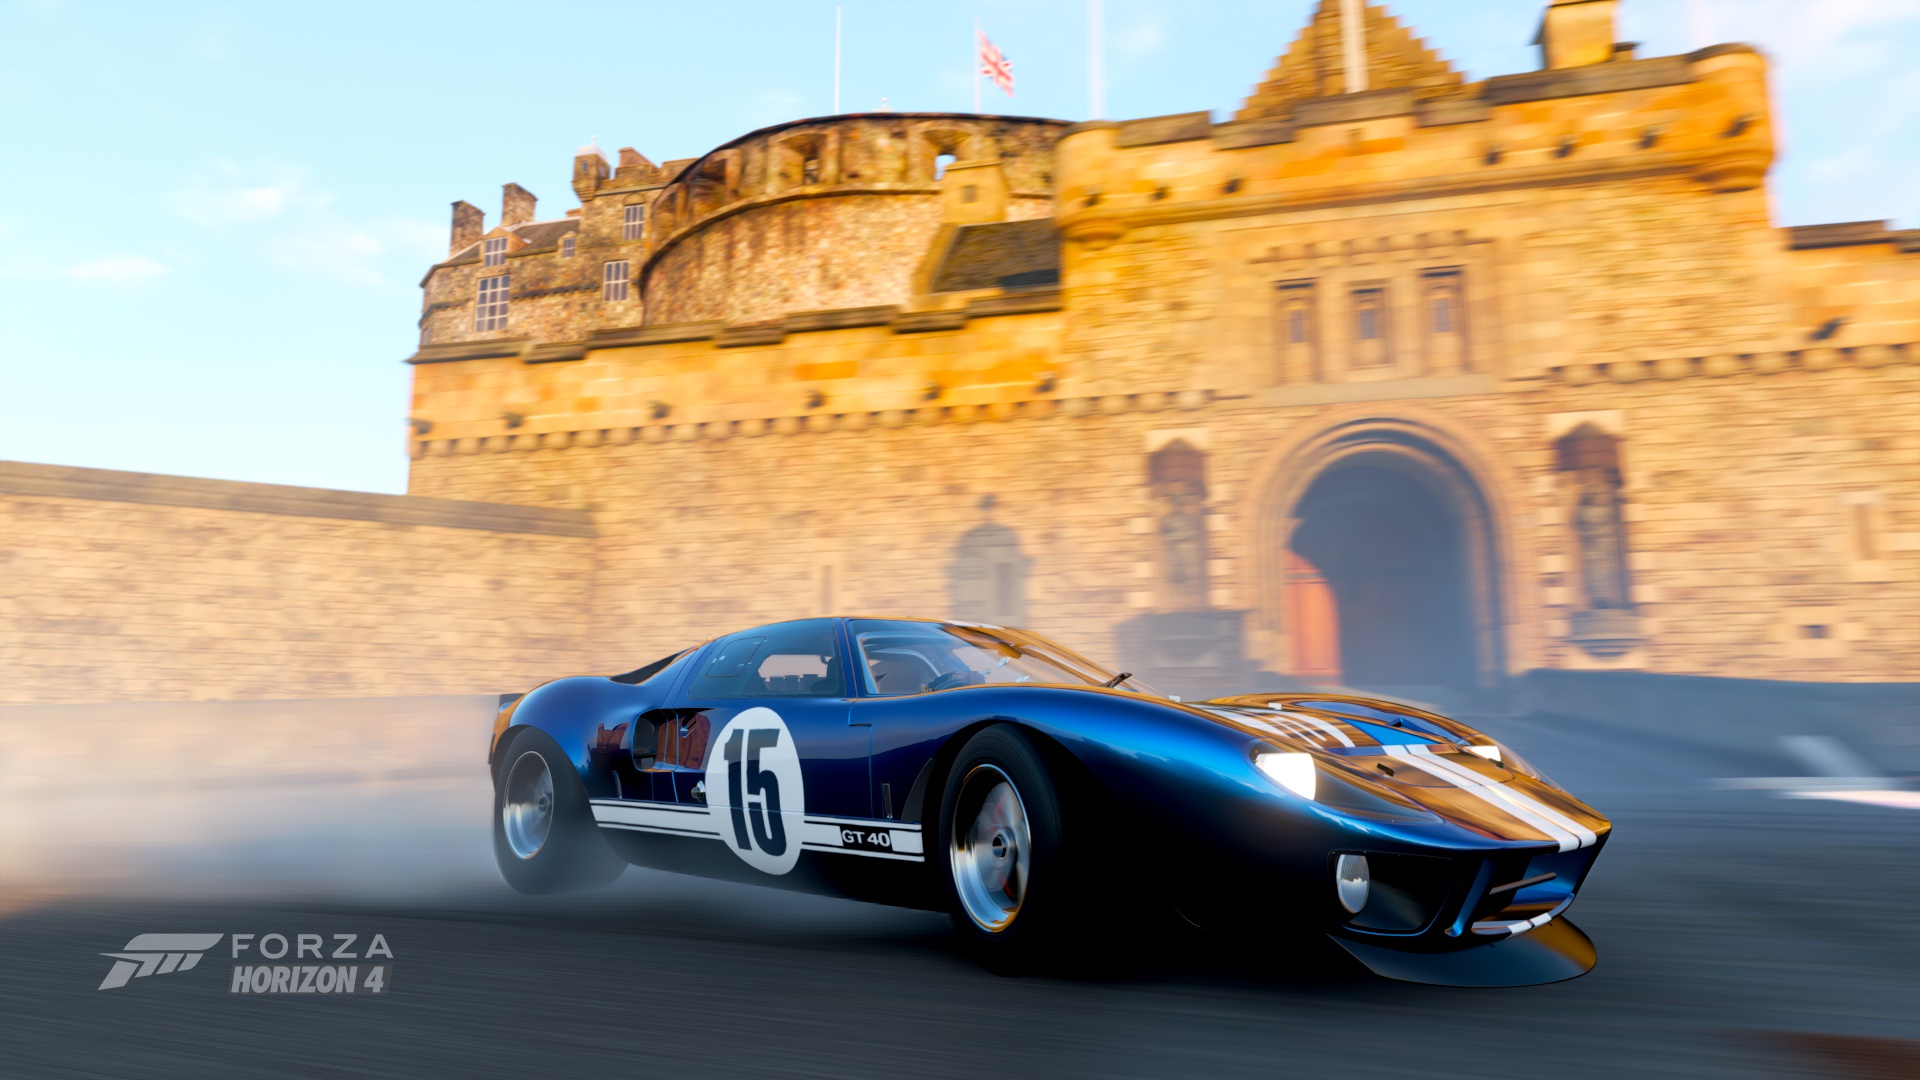 General 1920x1080 Forza Horizon 4 car castle Edinburgh Ford blue cars racing stripes Ford GT40 motion blur video games